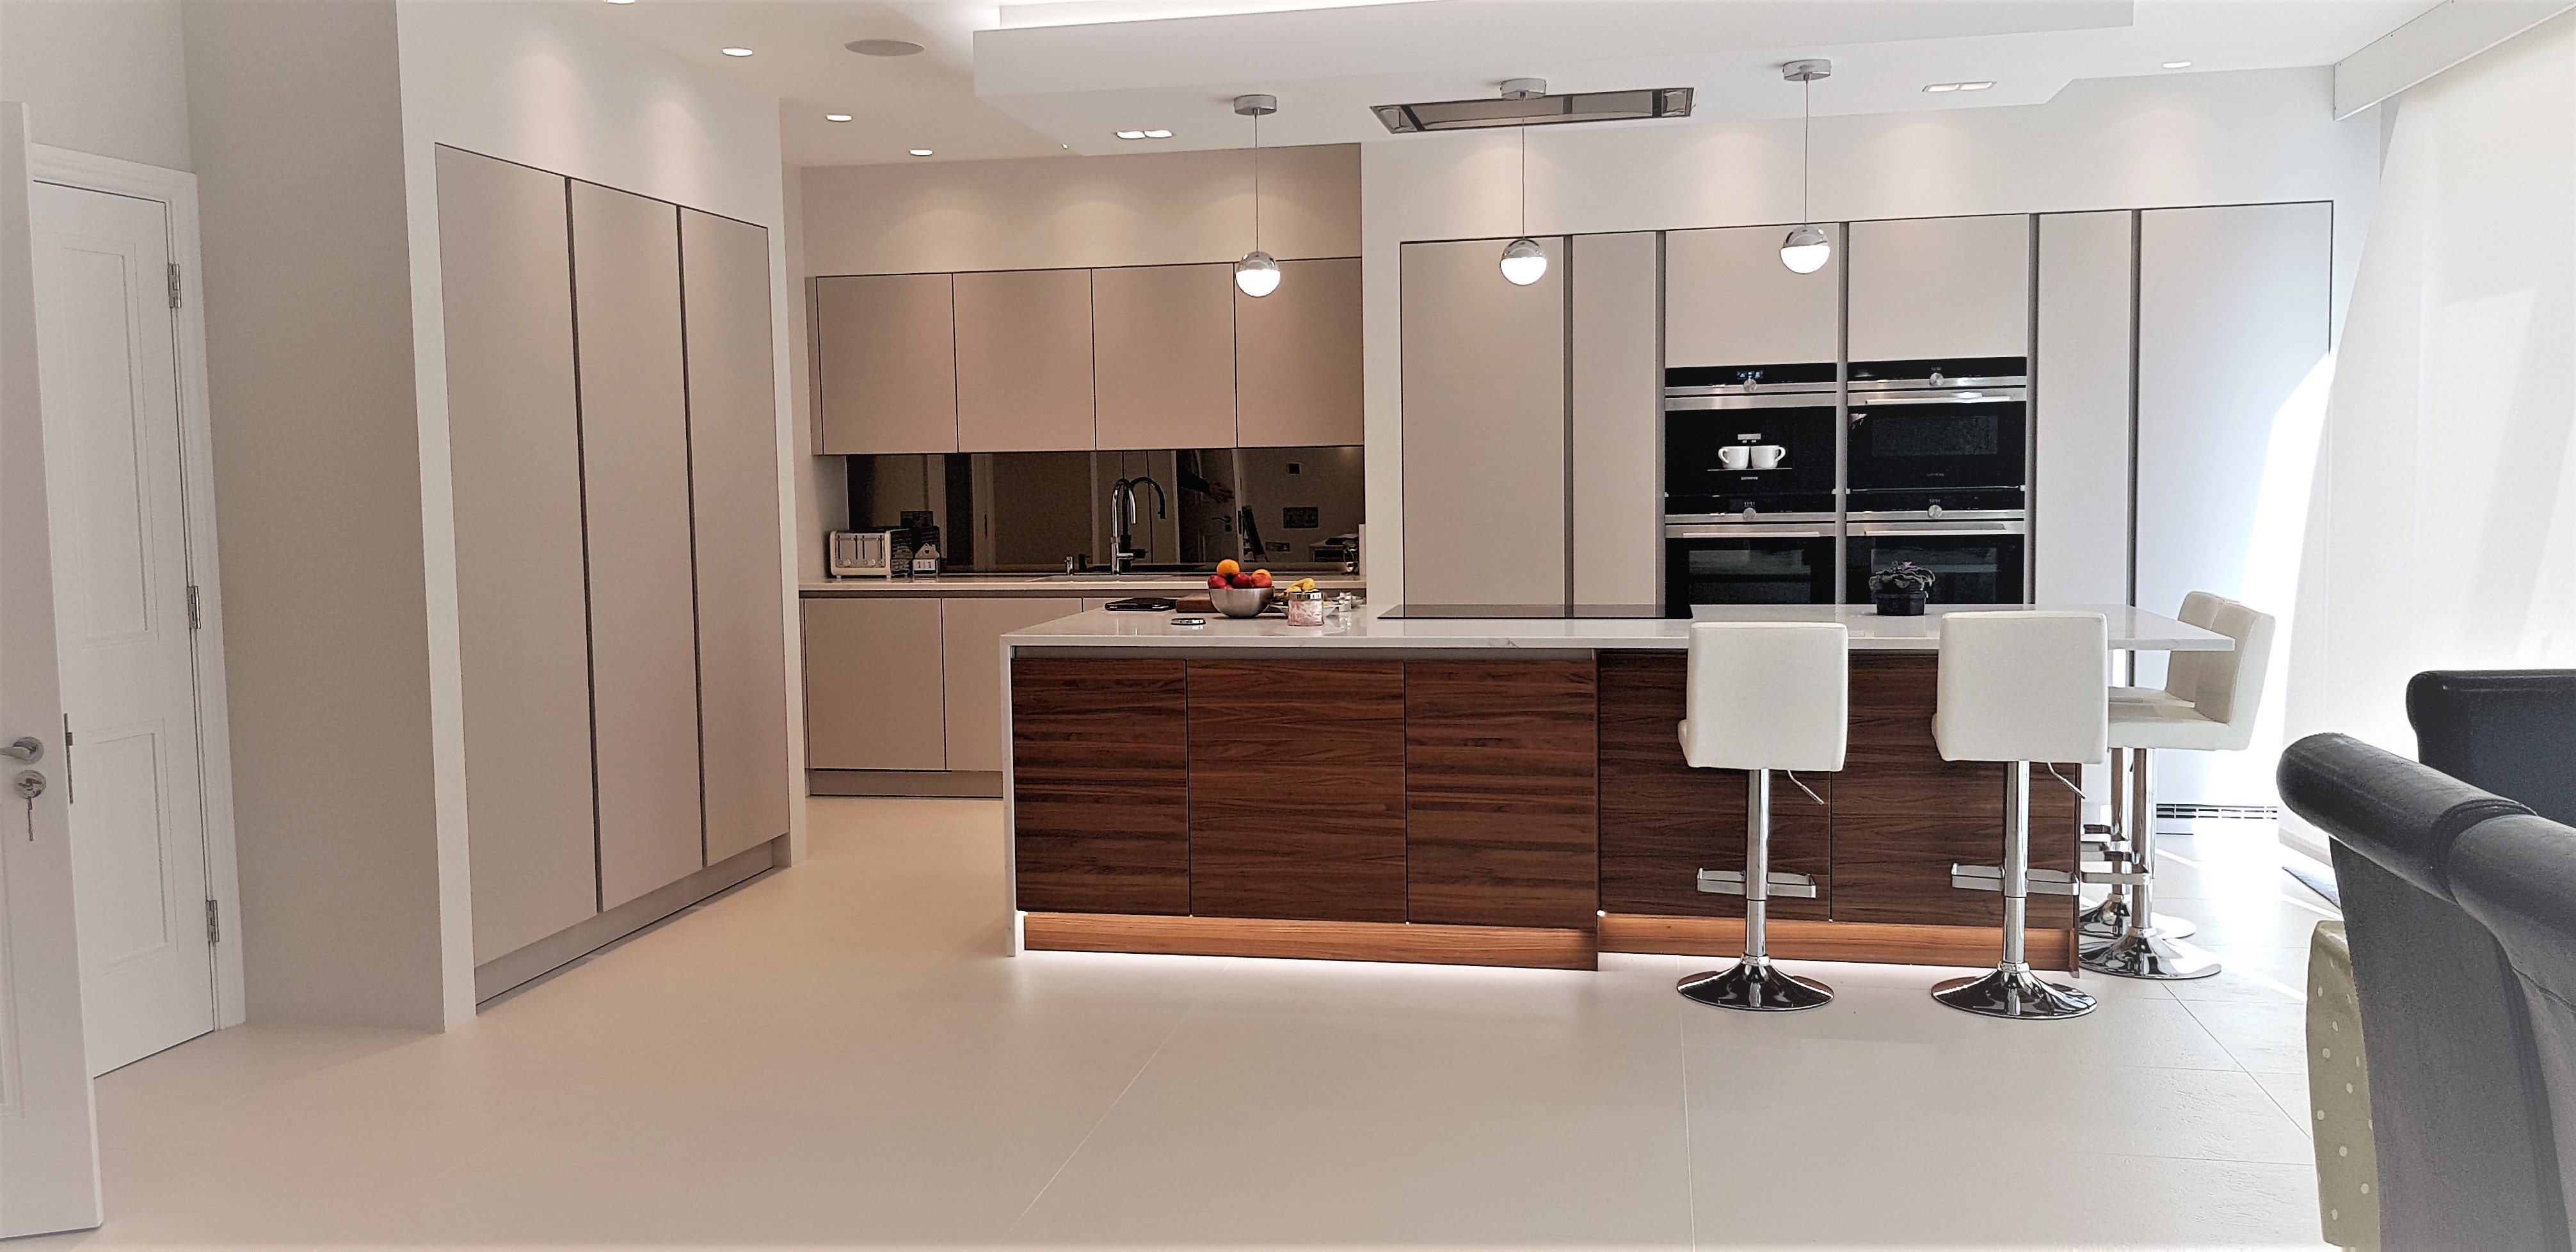 5 Best Kitchen Cabinet Design Trends Of 2019 Kbsa